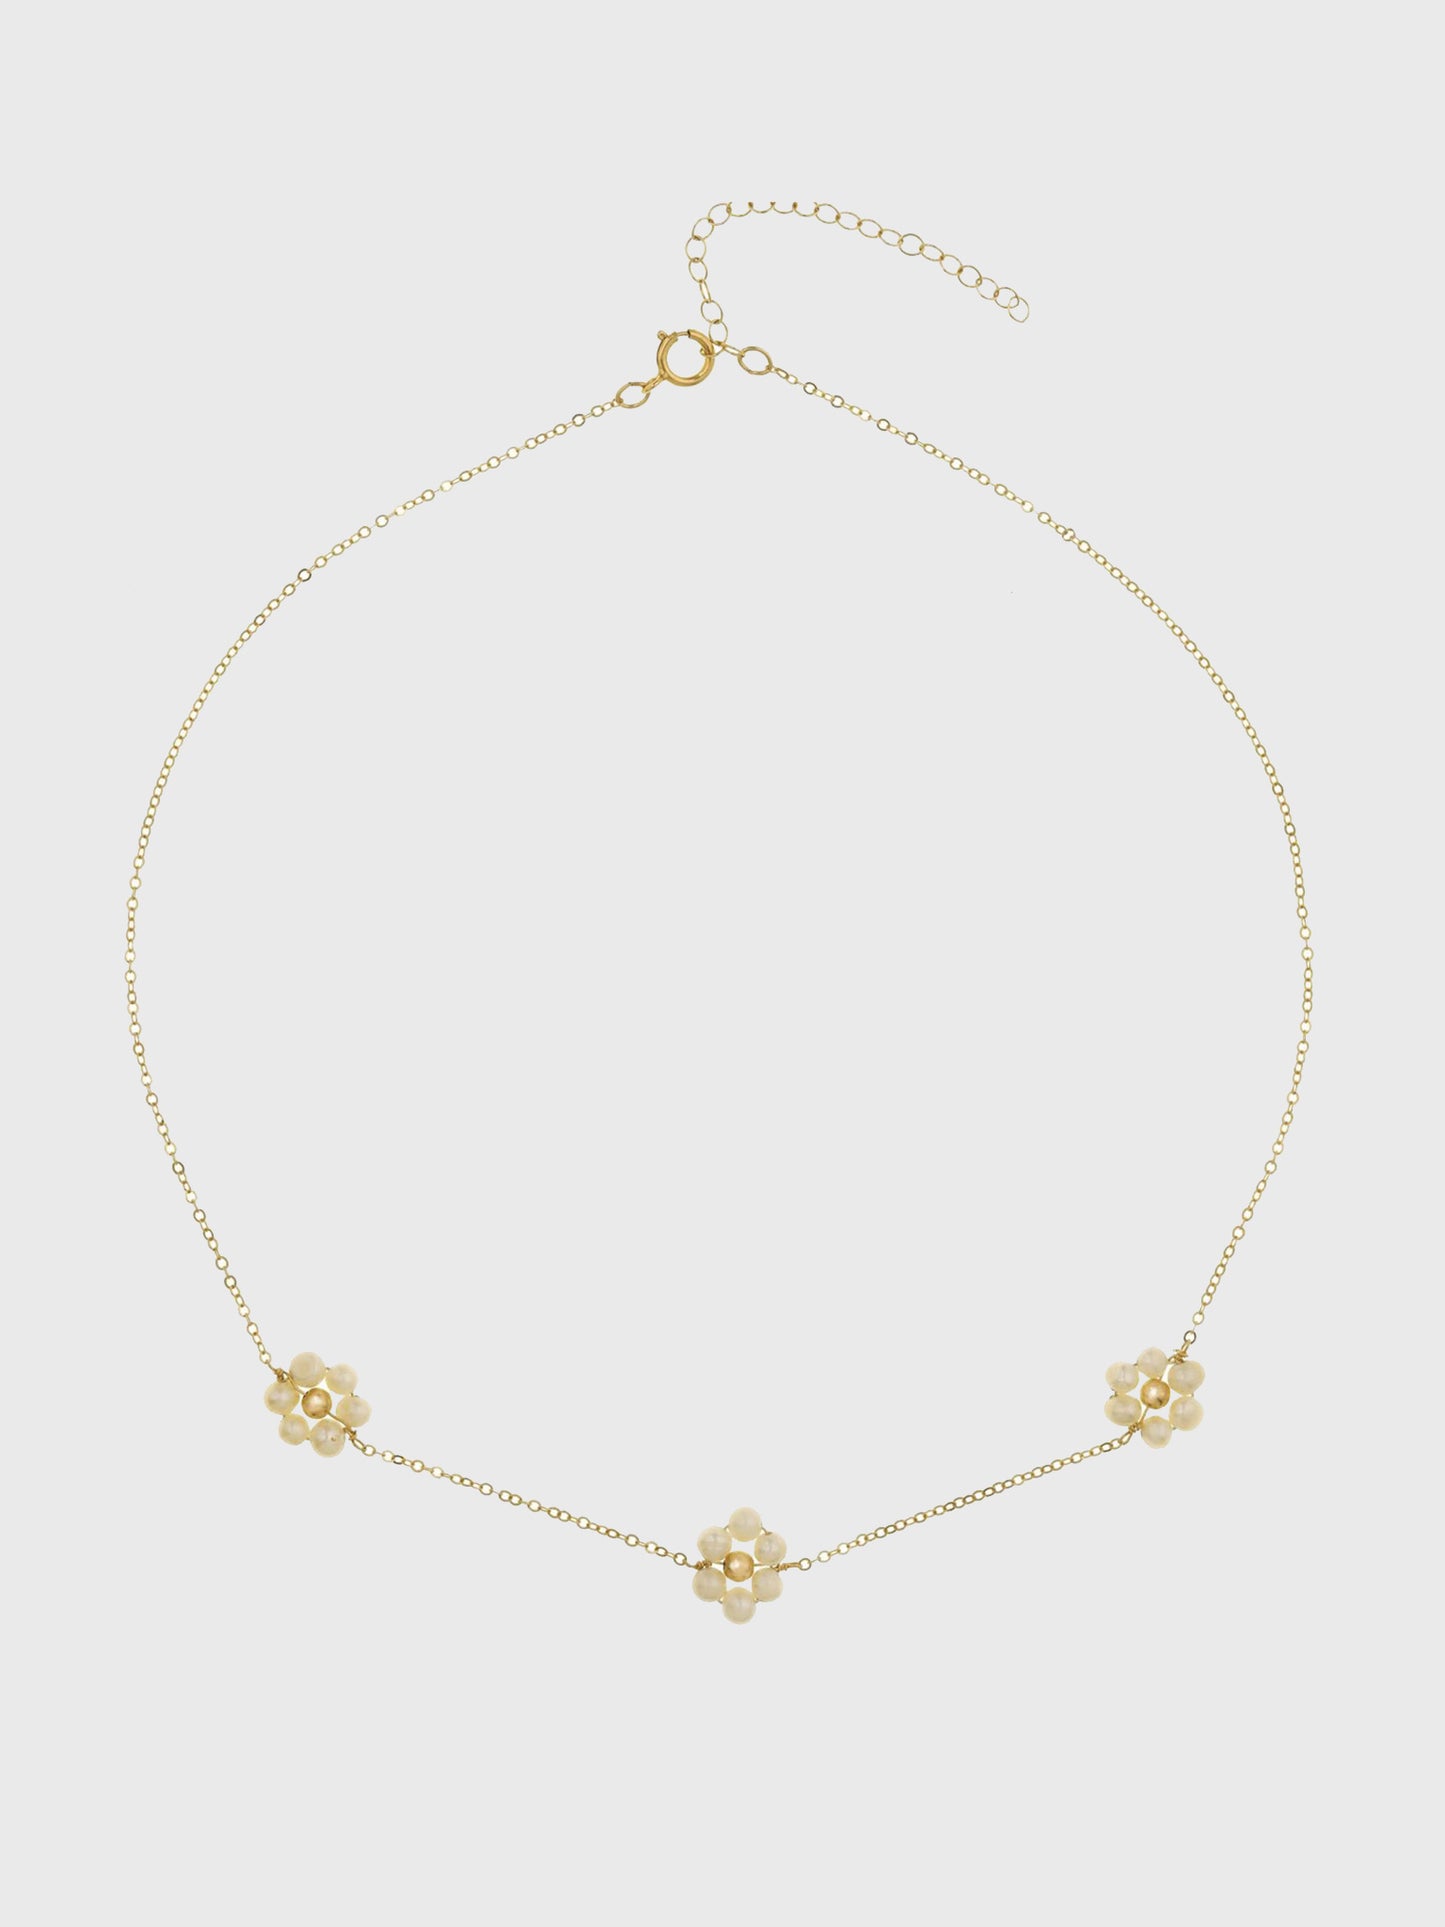 Kozakh Jewelry Fiores Choker Necklace